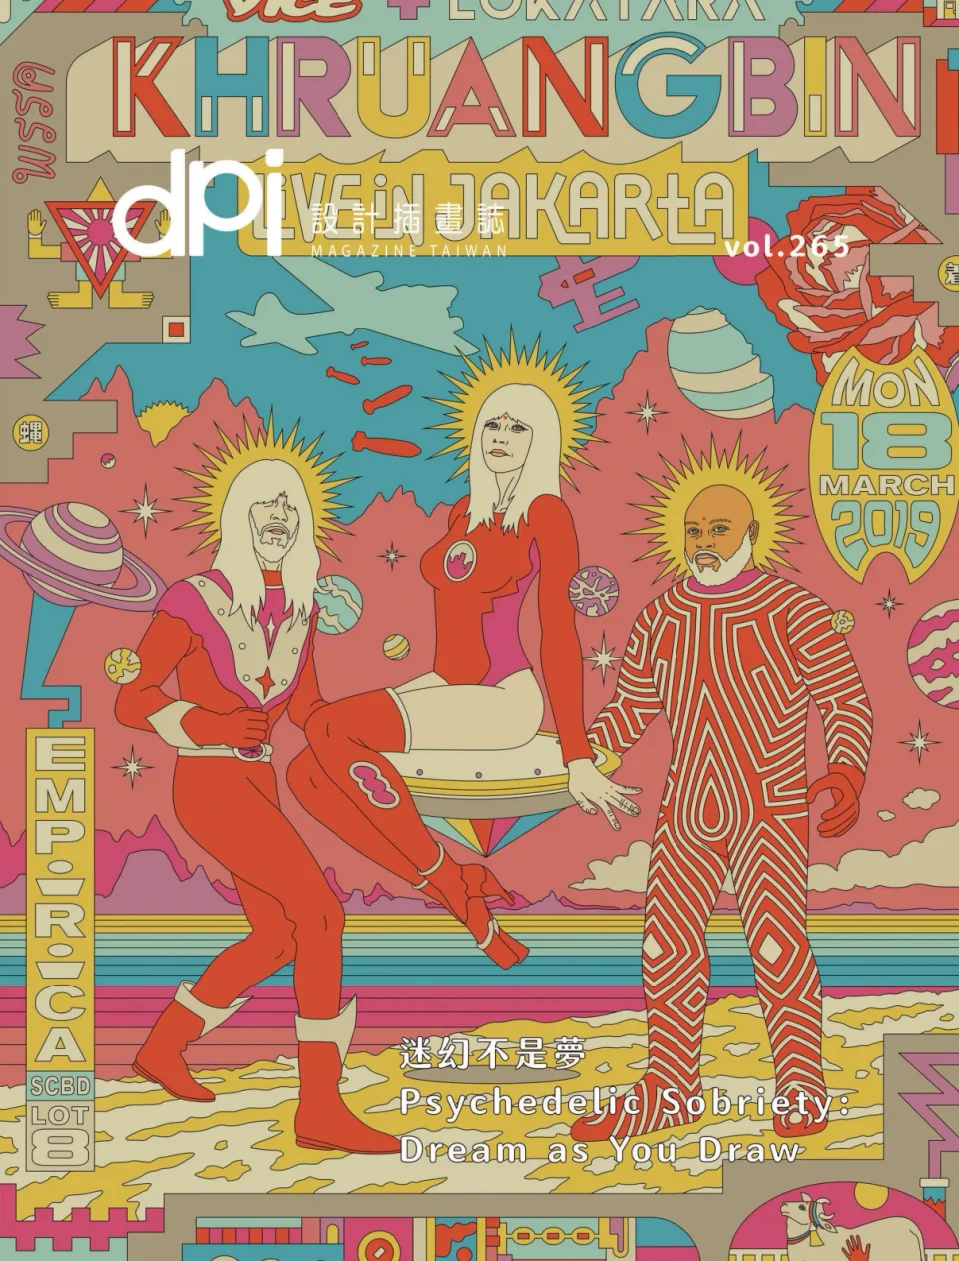 Dpi Magazine Taiwan